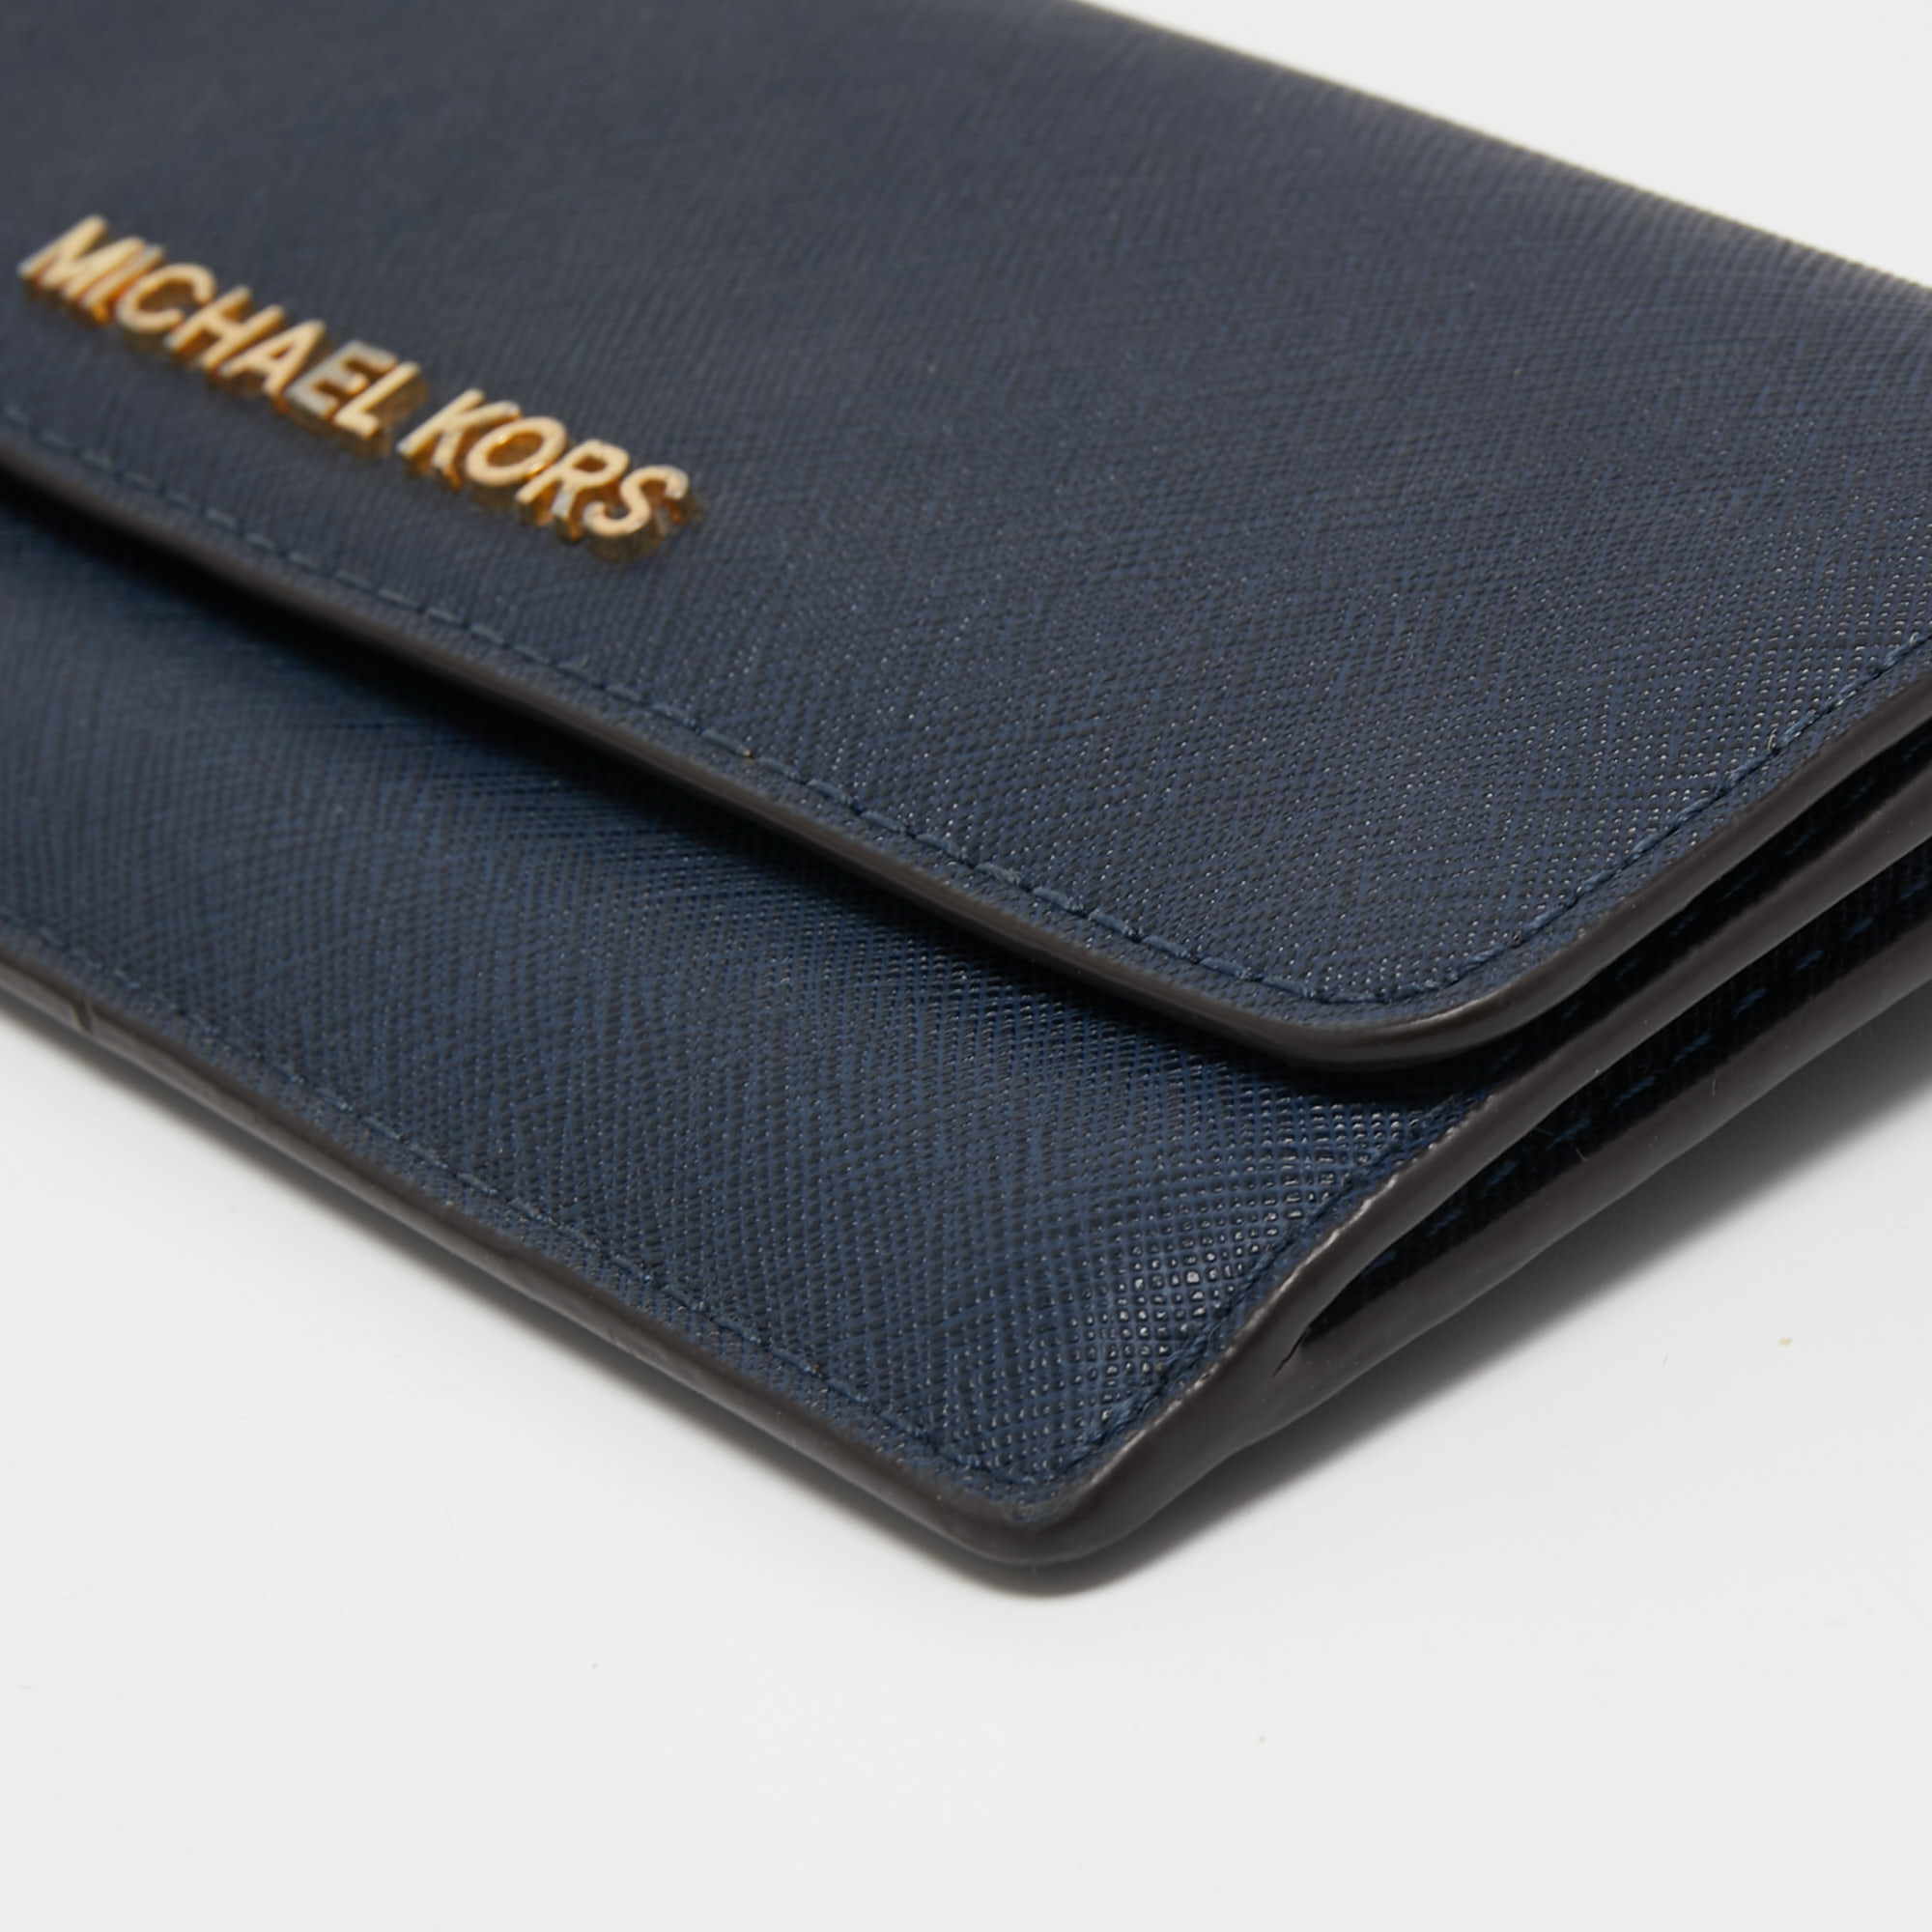 Michael Kors Blue Leather Jet Set Travel Wallet